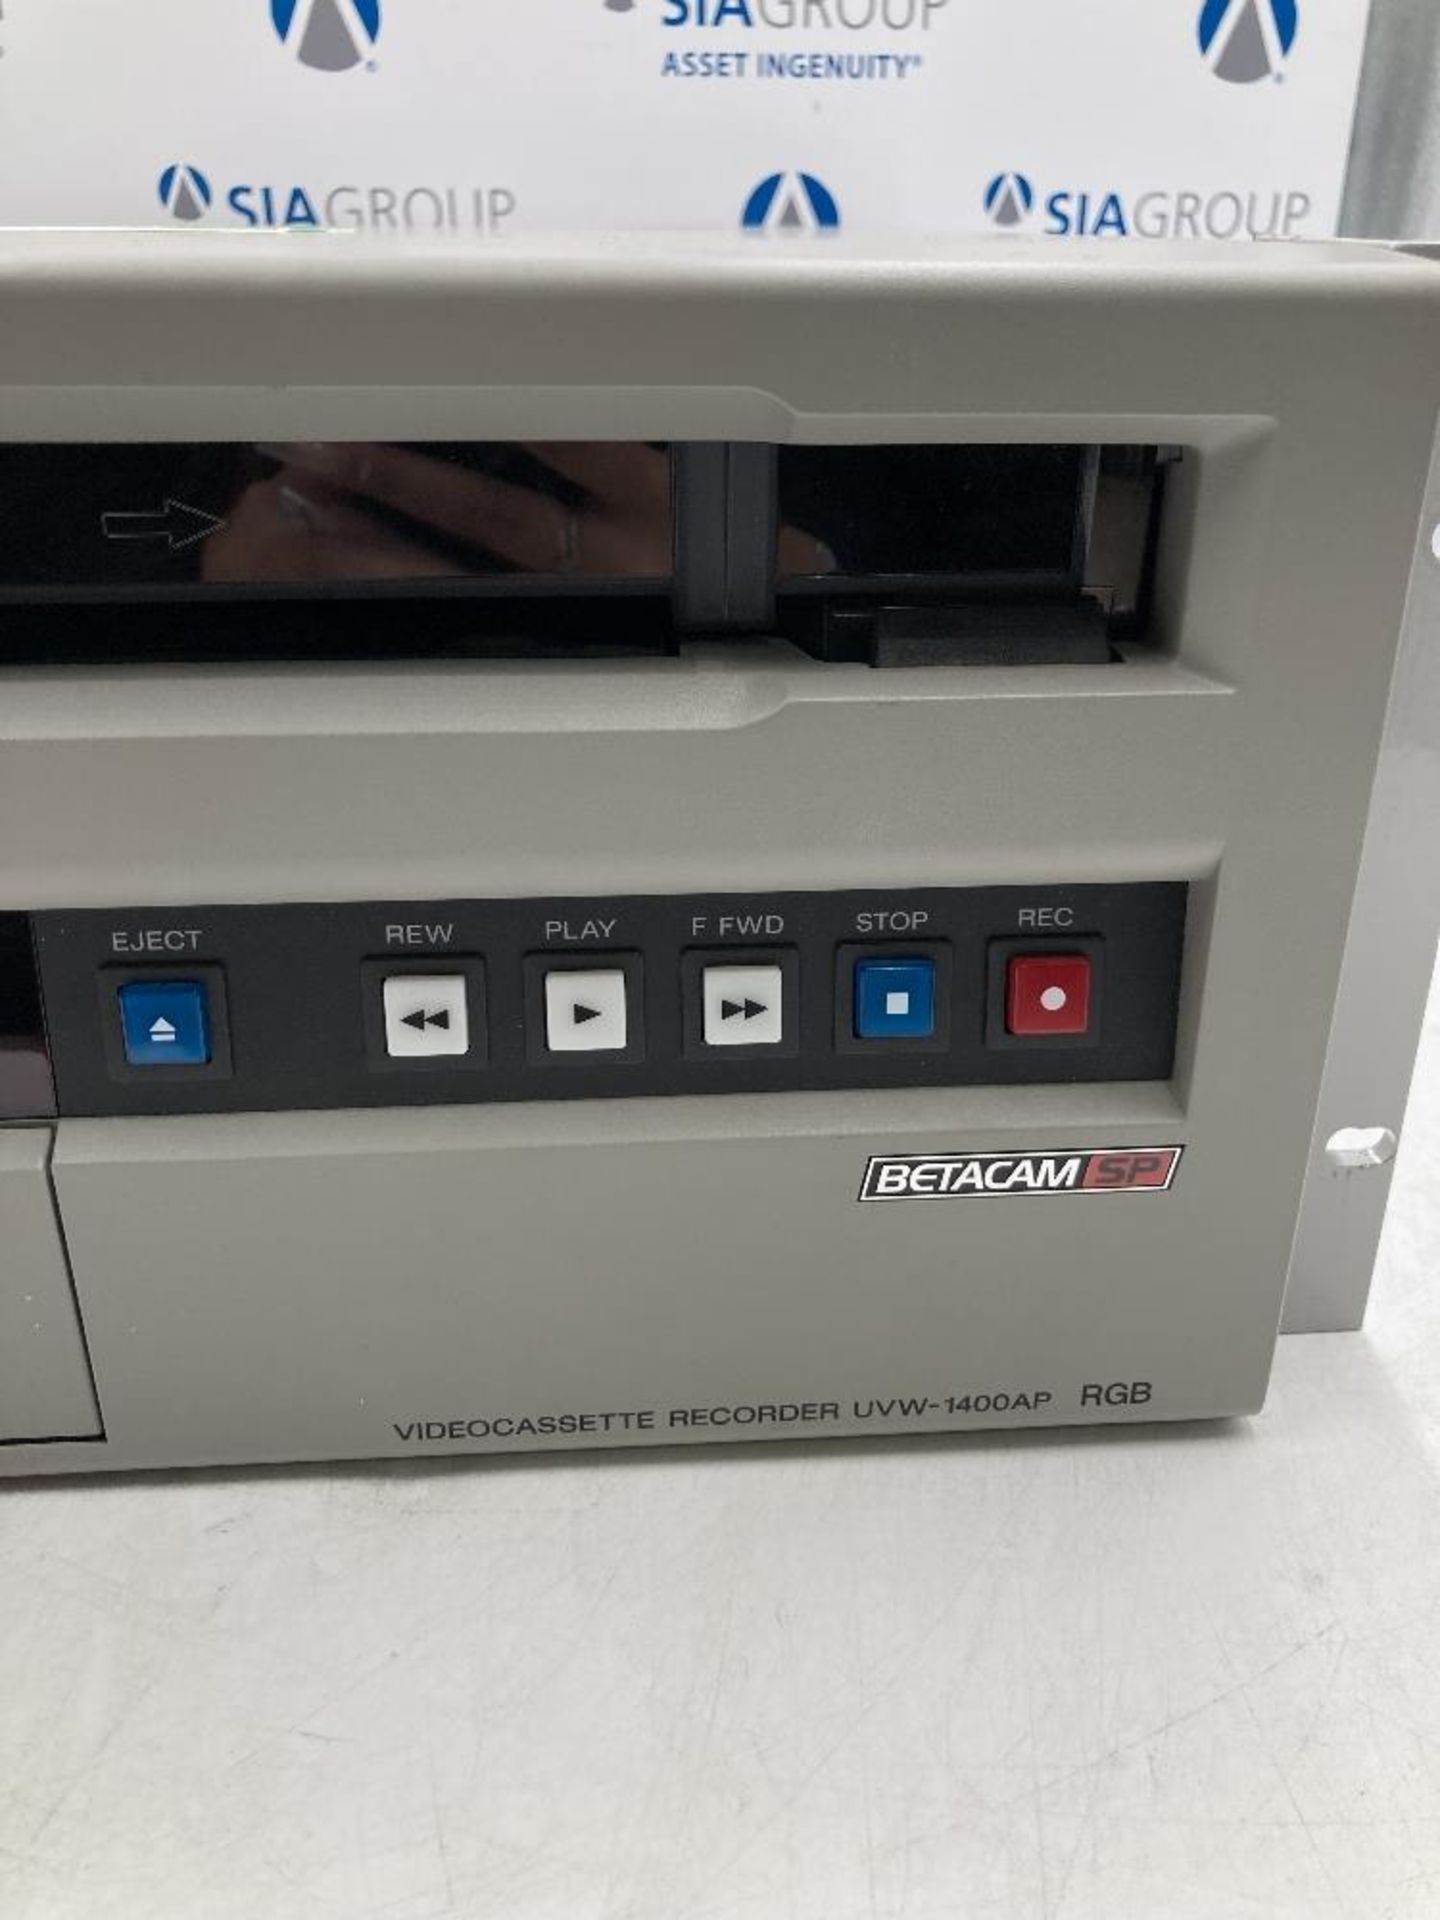 Sony Video UVW-1400 AP Betacam Cassette Recorder - Image 4 of 4